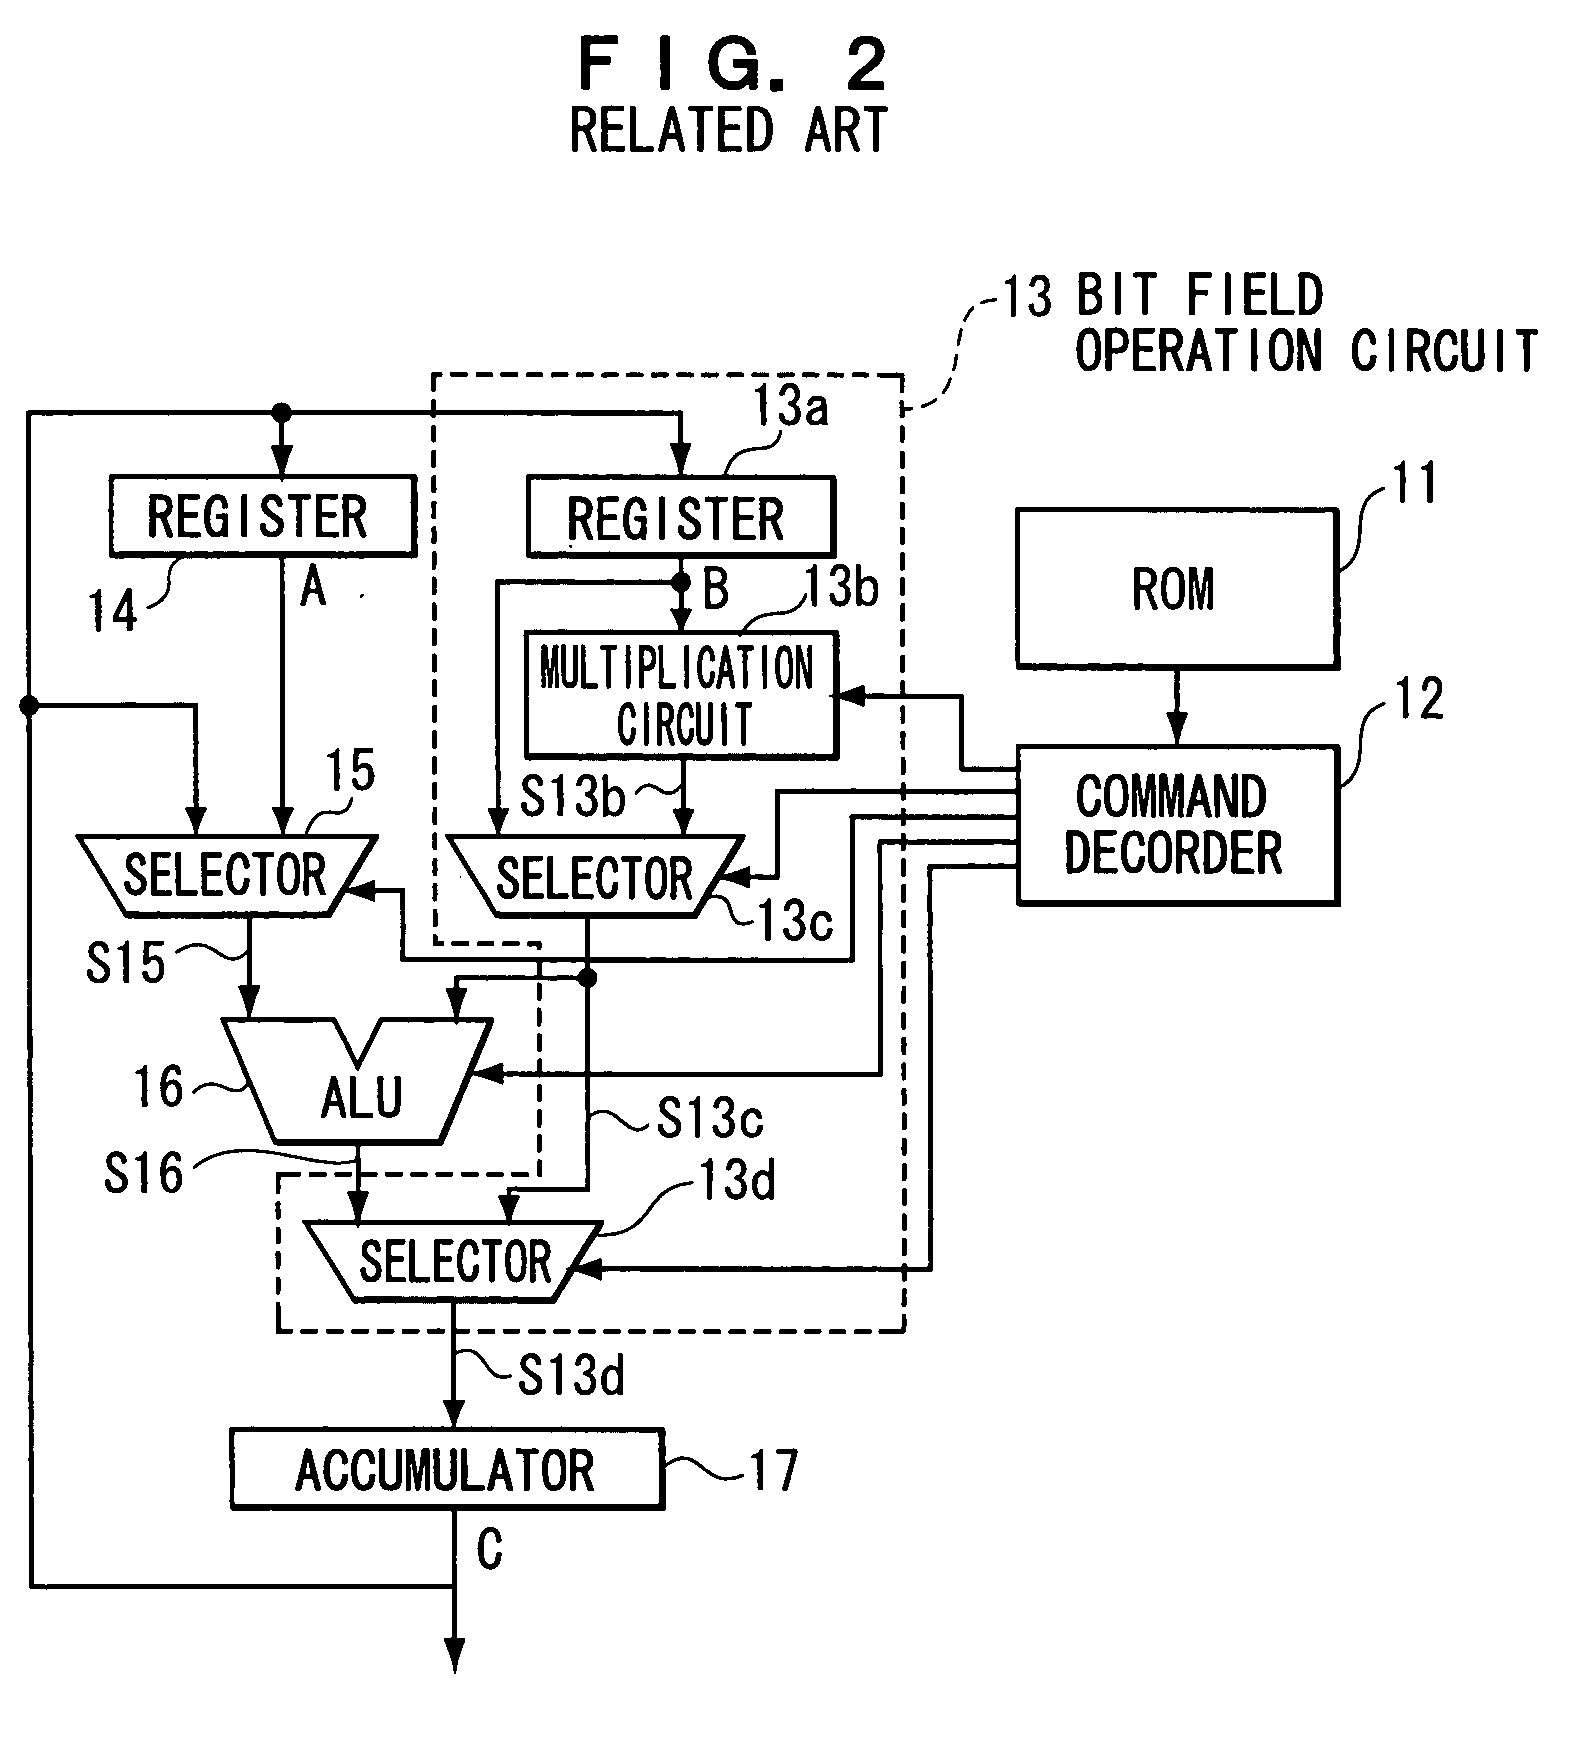 Bit field operation circuit